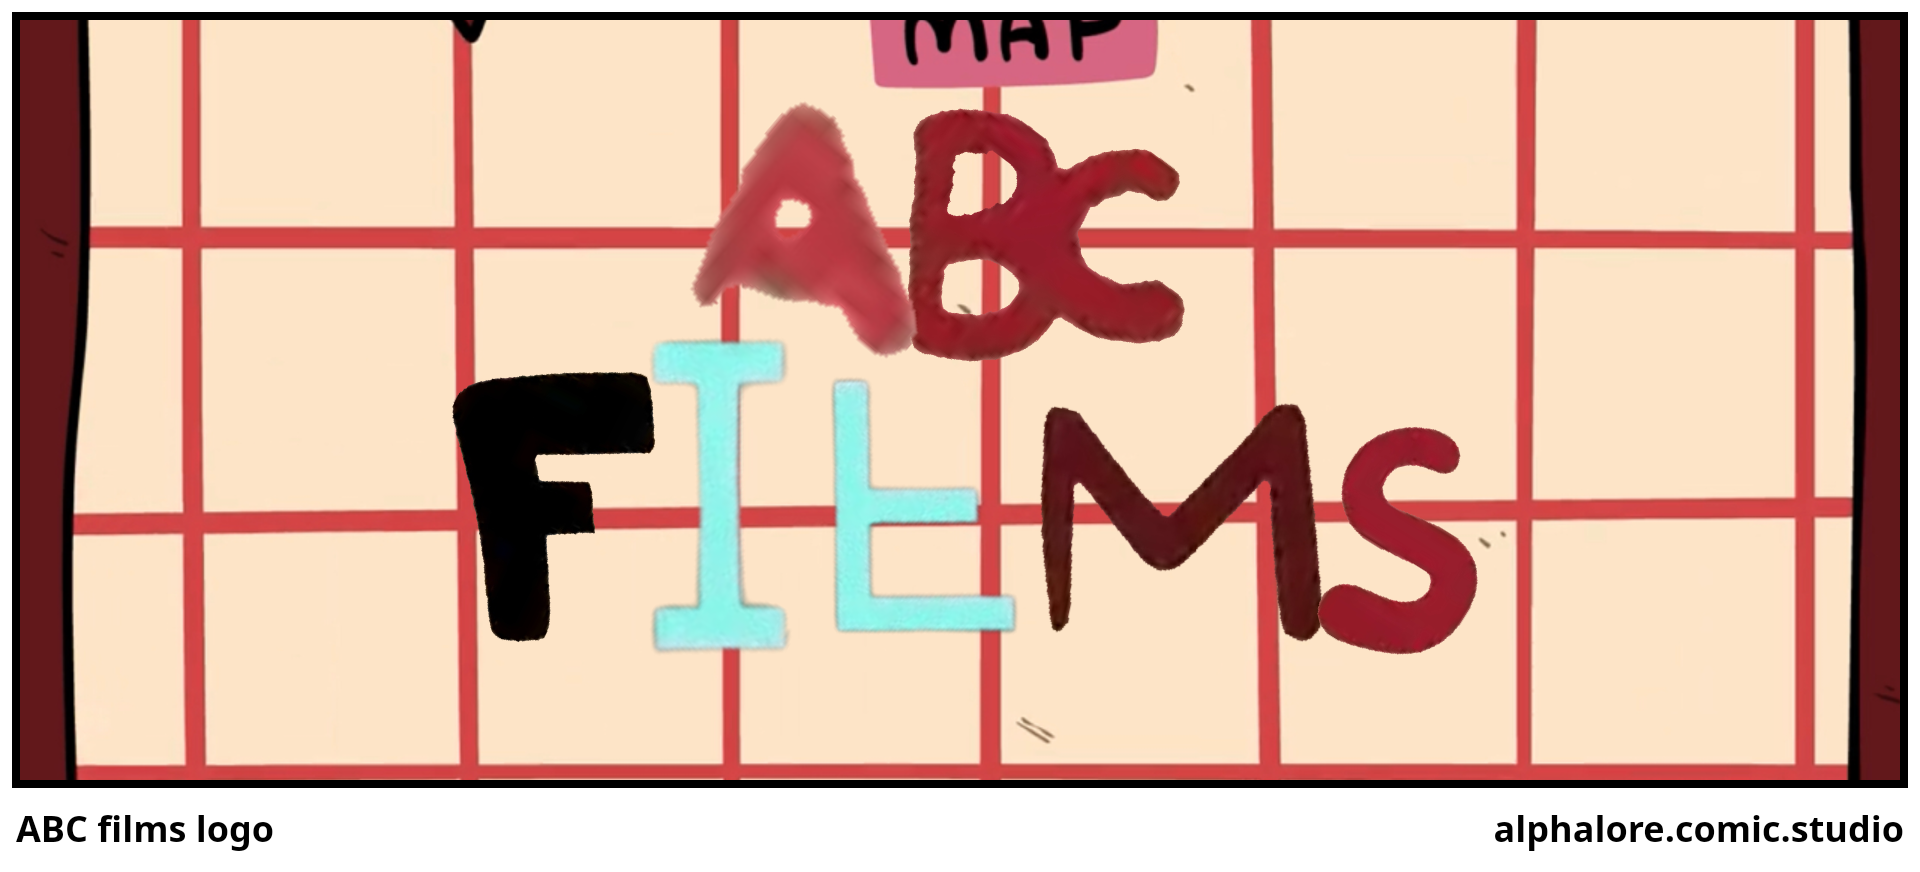 ABC films logo